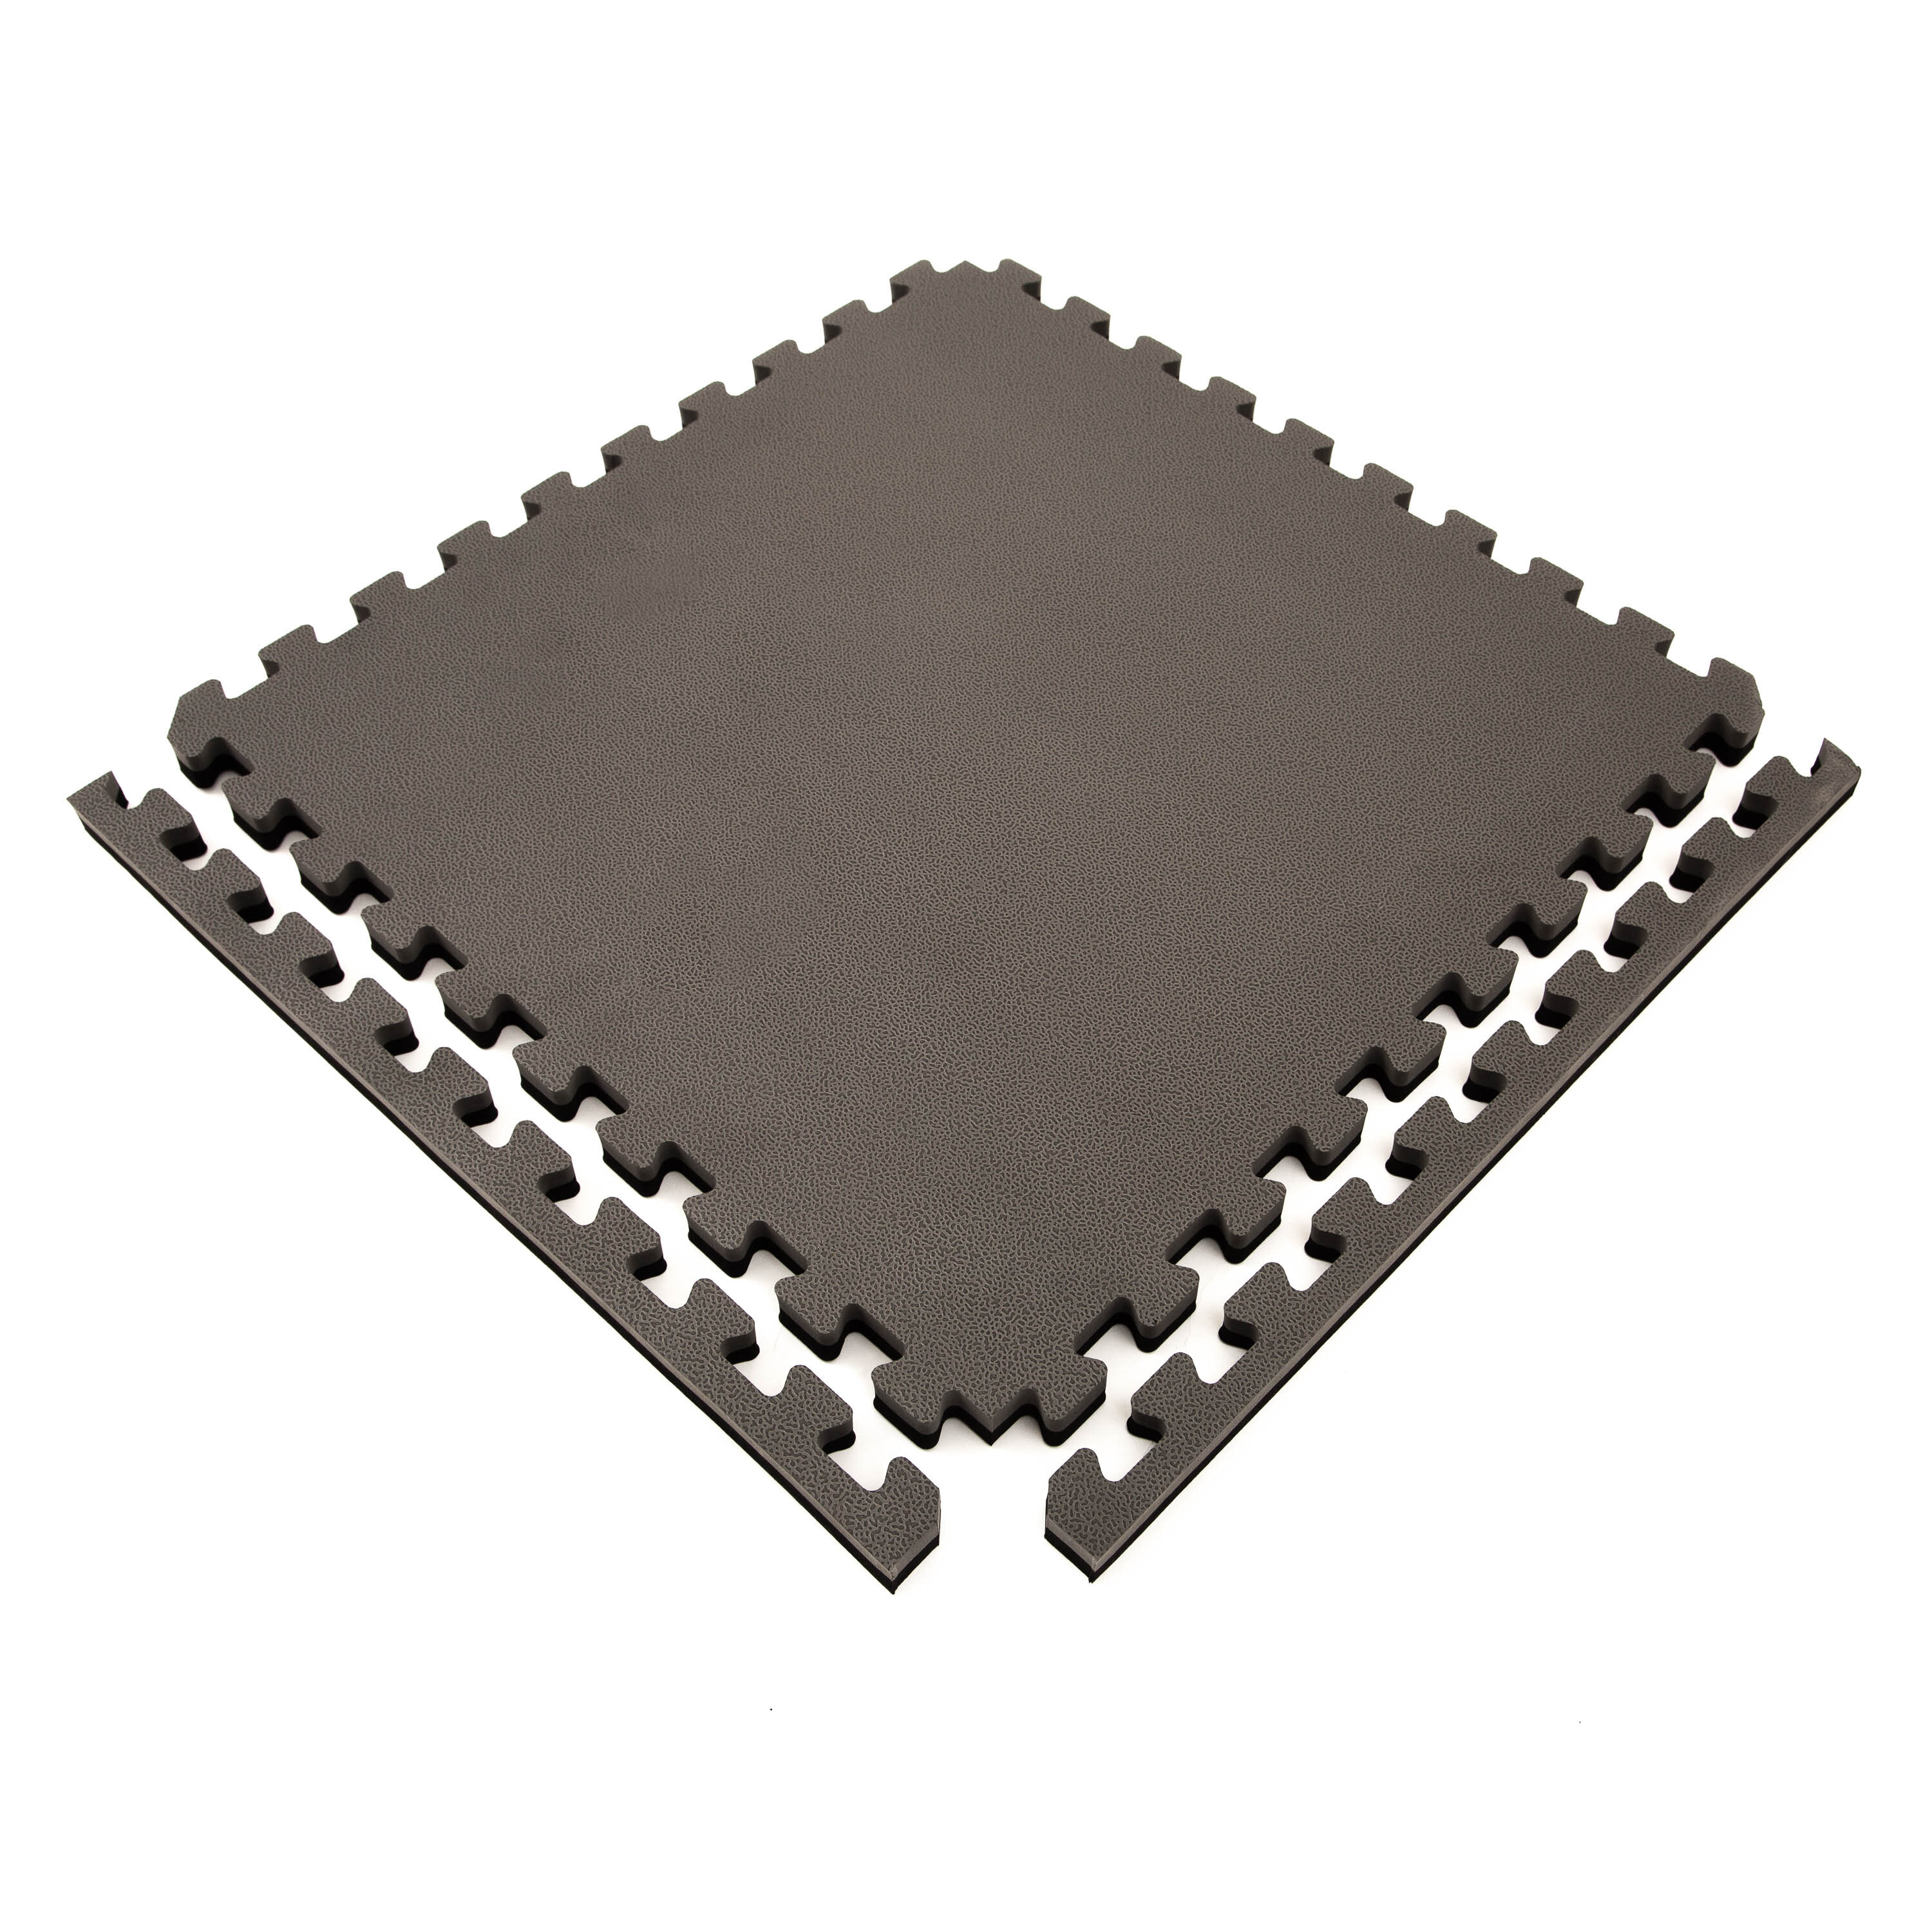 Flooringinc Extreme 1.6 inch Thick High Impact Interlocking Floor Foam tiles, Single Tile, 3.9 Sq/Ft, Red Flooringinc Color: Gray